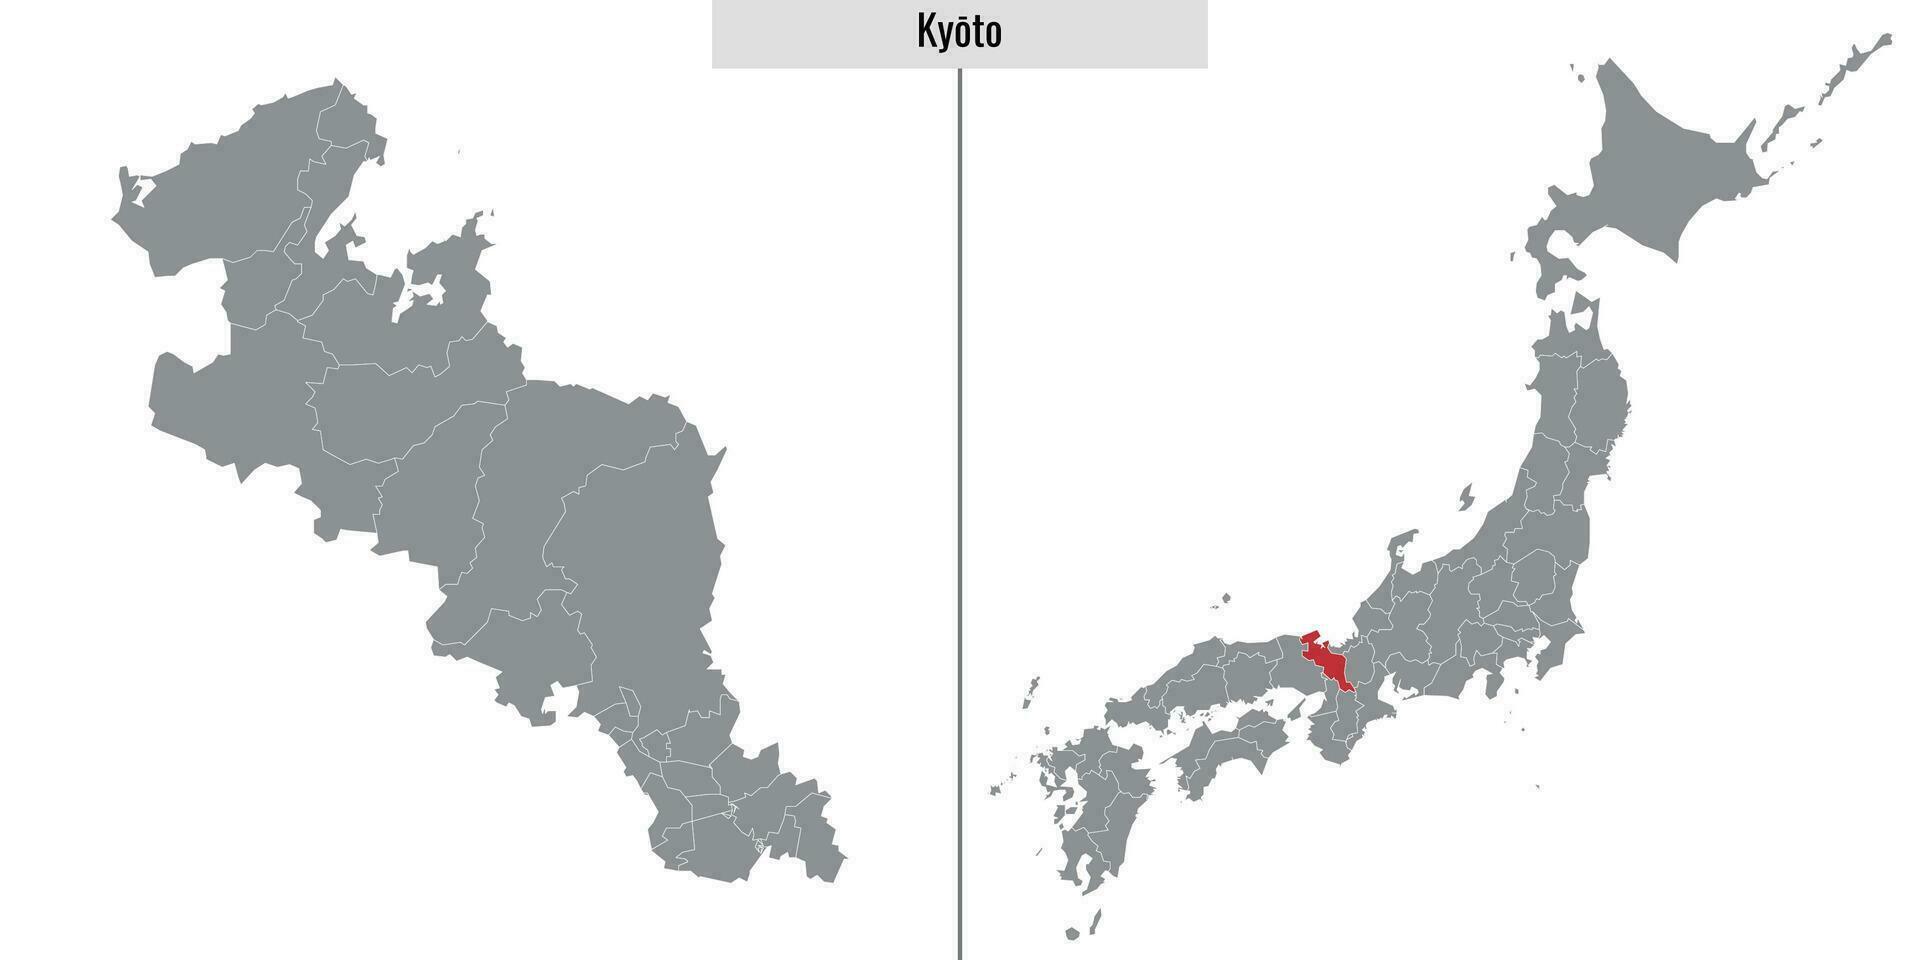 Karta prefektur av japan vektor